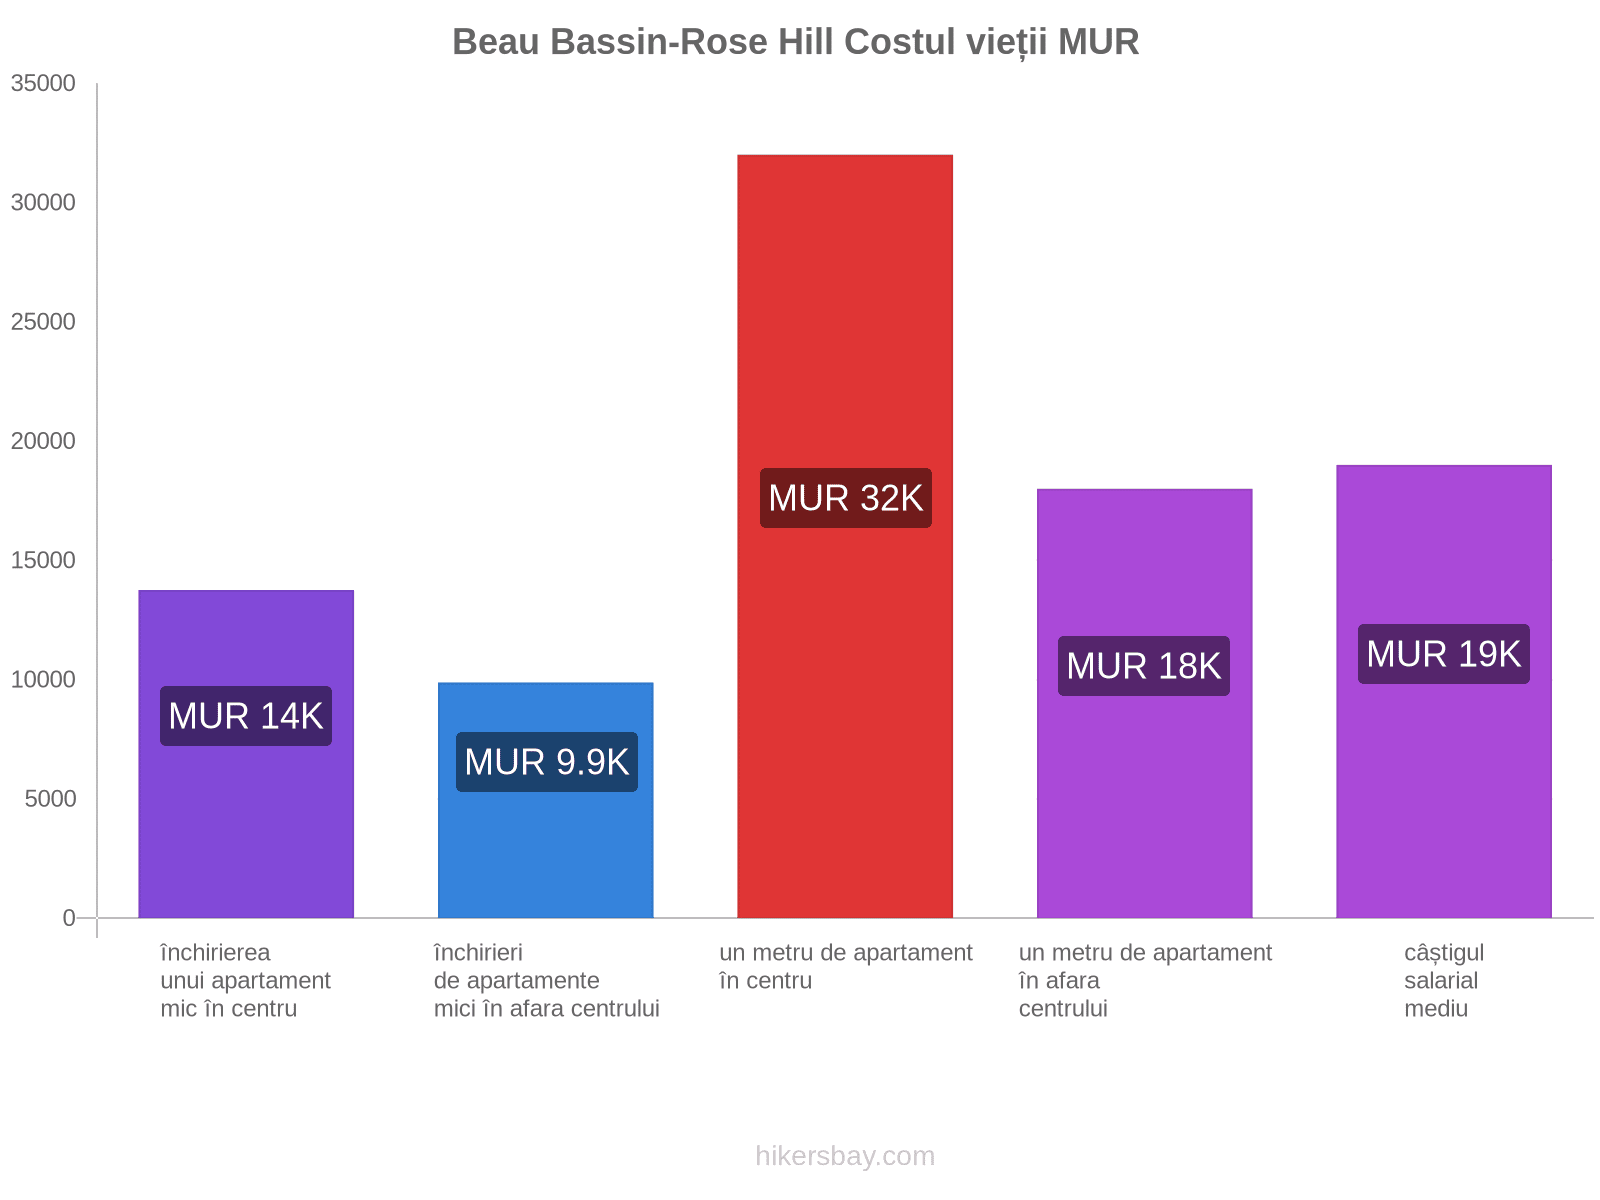 Beau Bassin-Rose Hill costul vieții hikersbay.com